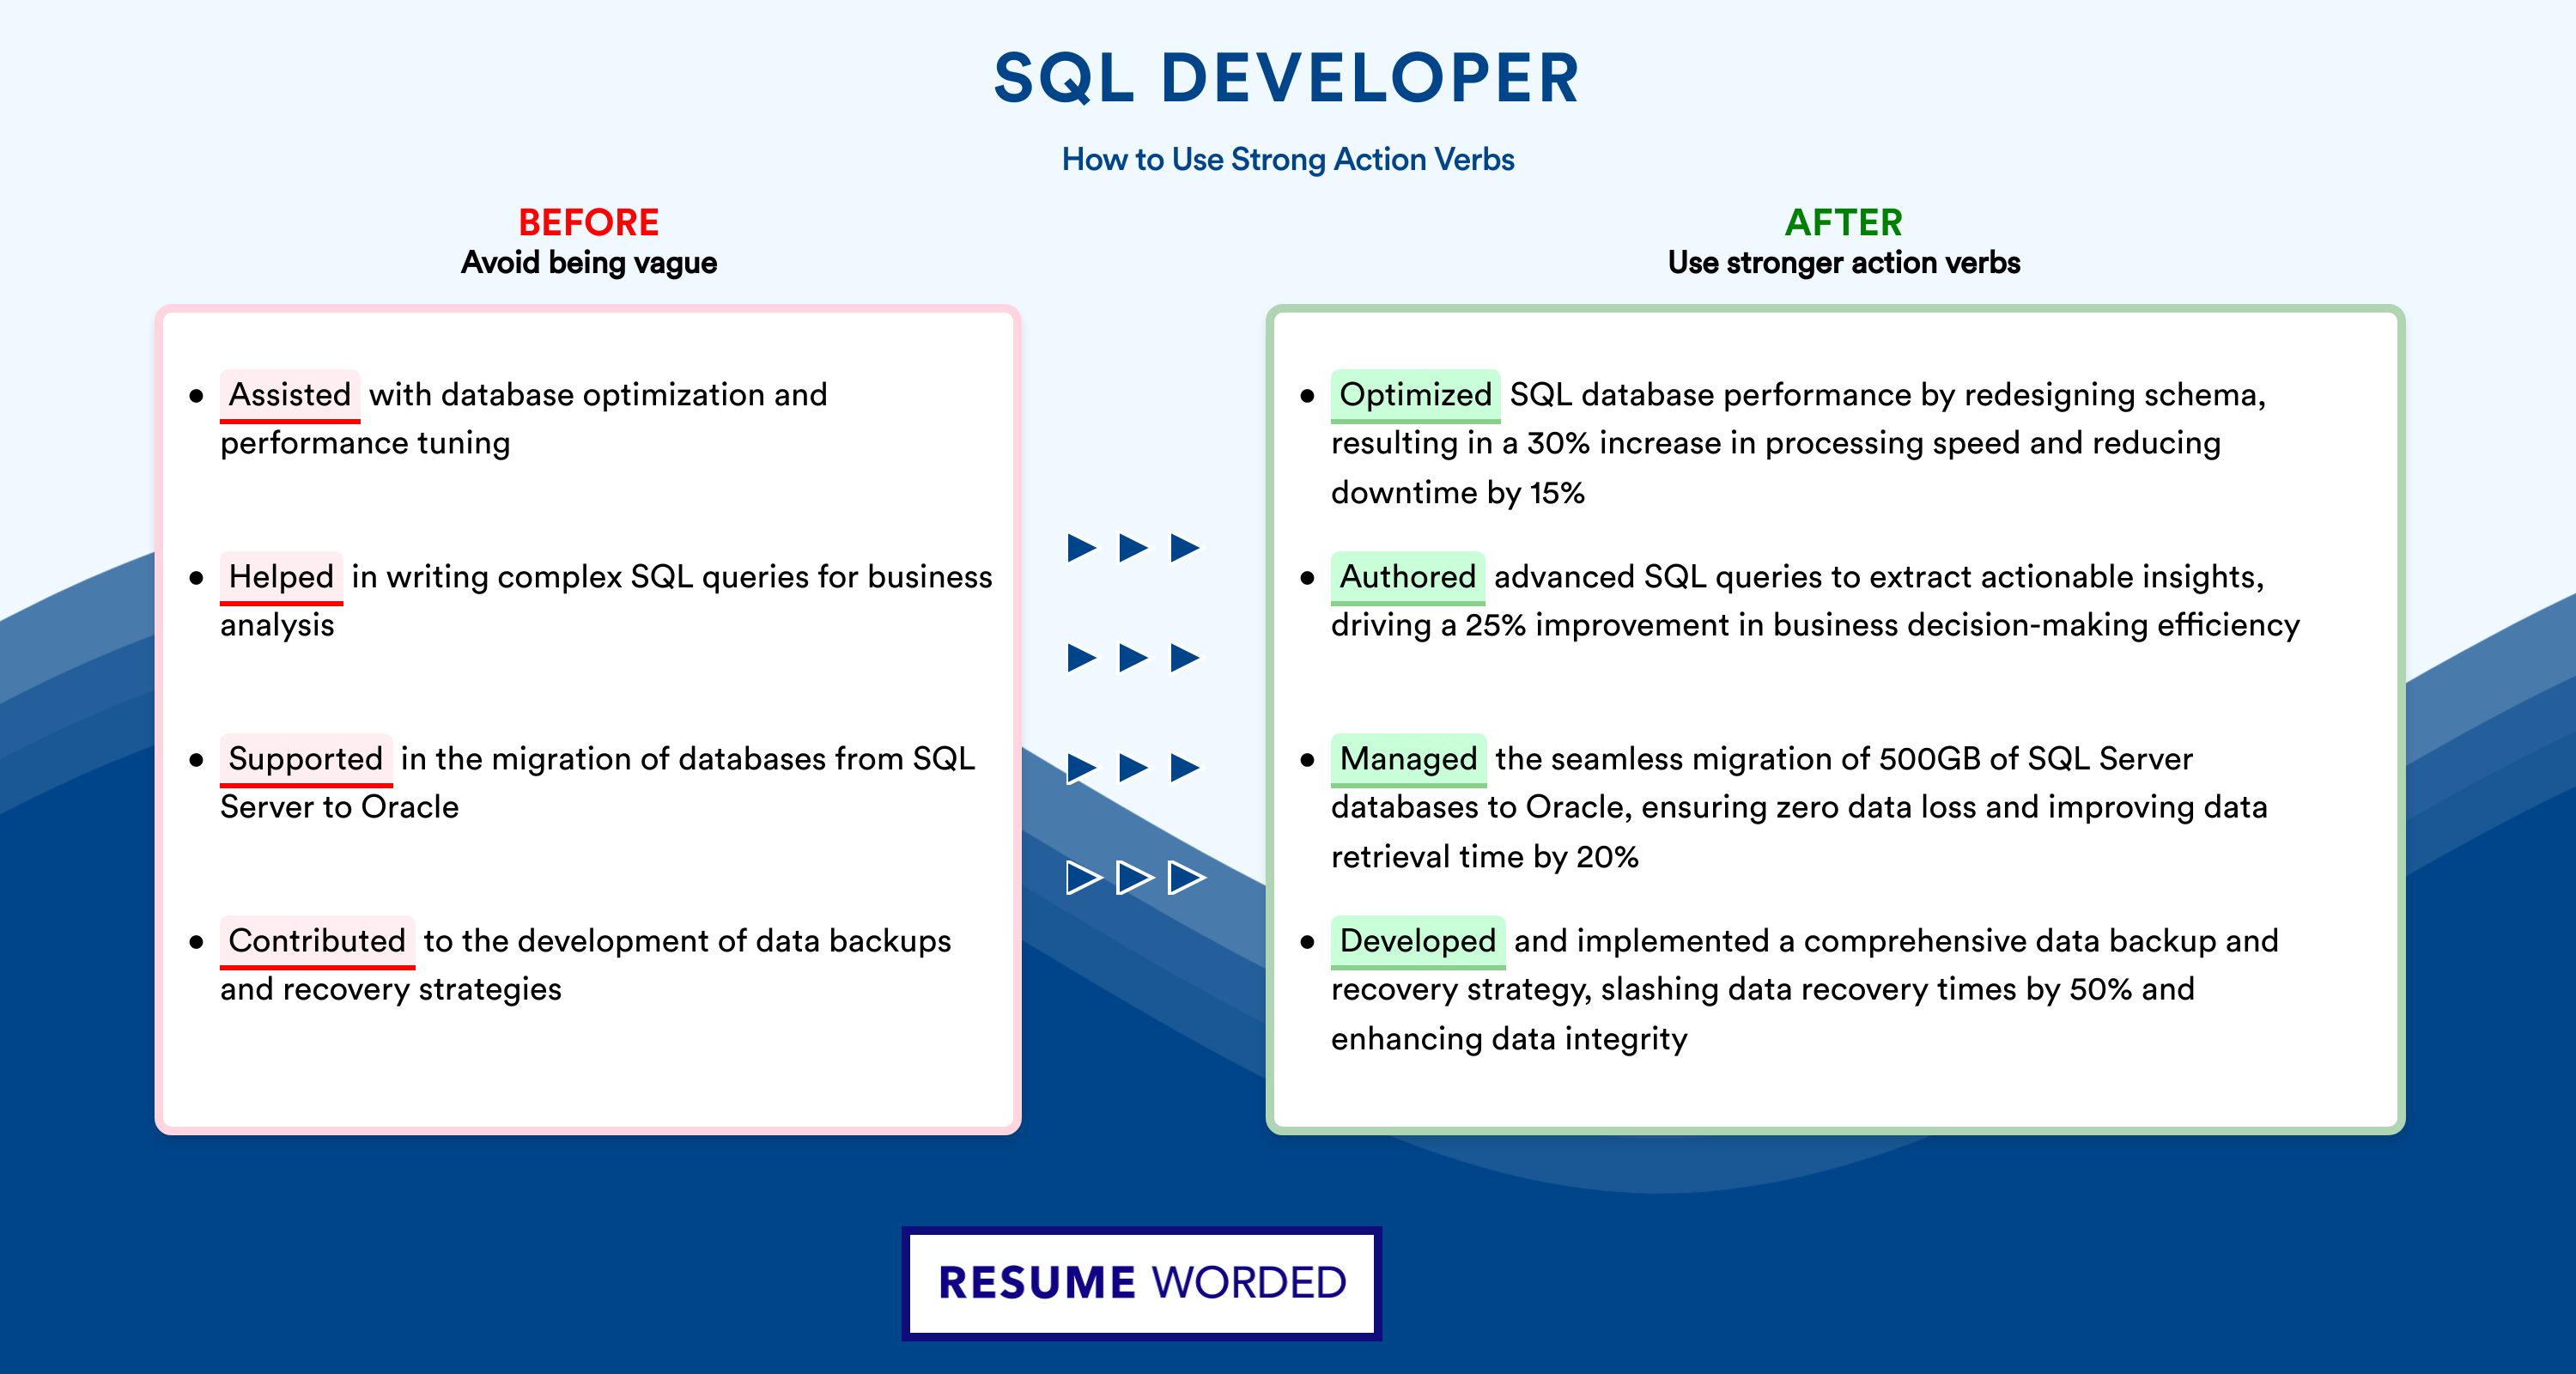 Action Verbs for SQL Developer